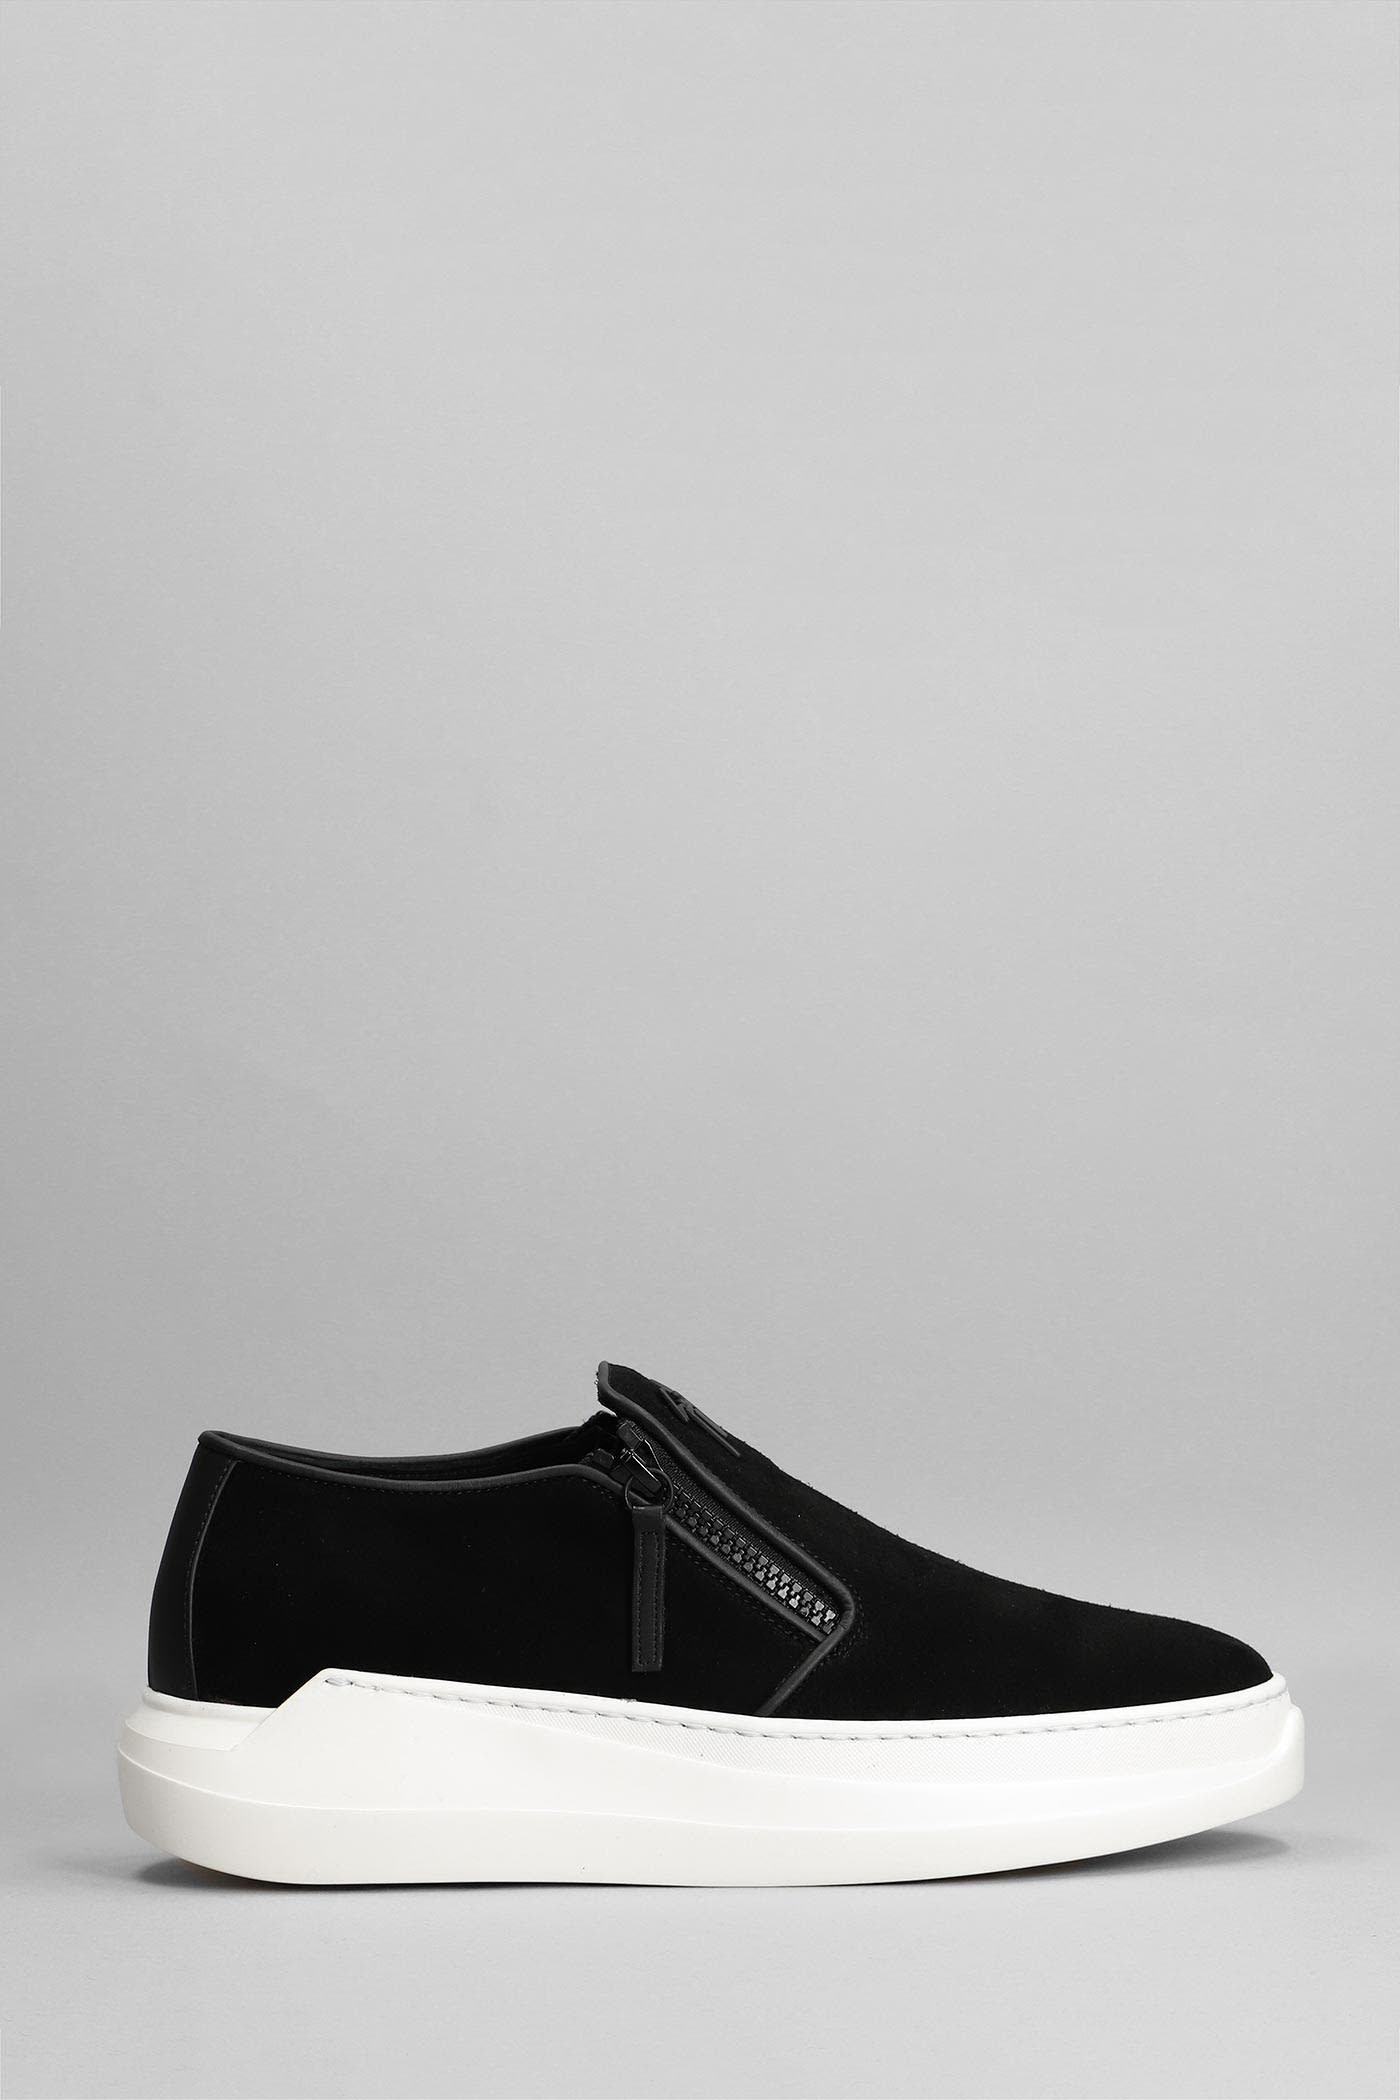 Giuseppe Zanotti Conley Zip Sneakers In Black Suede